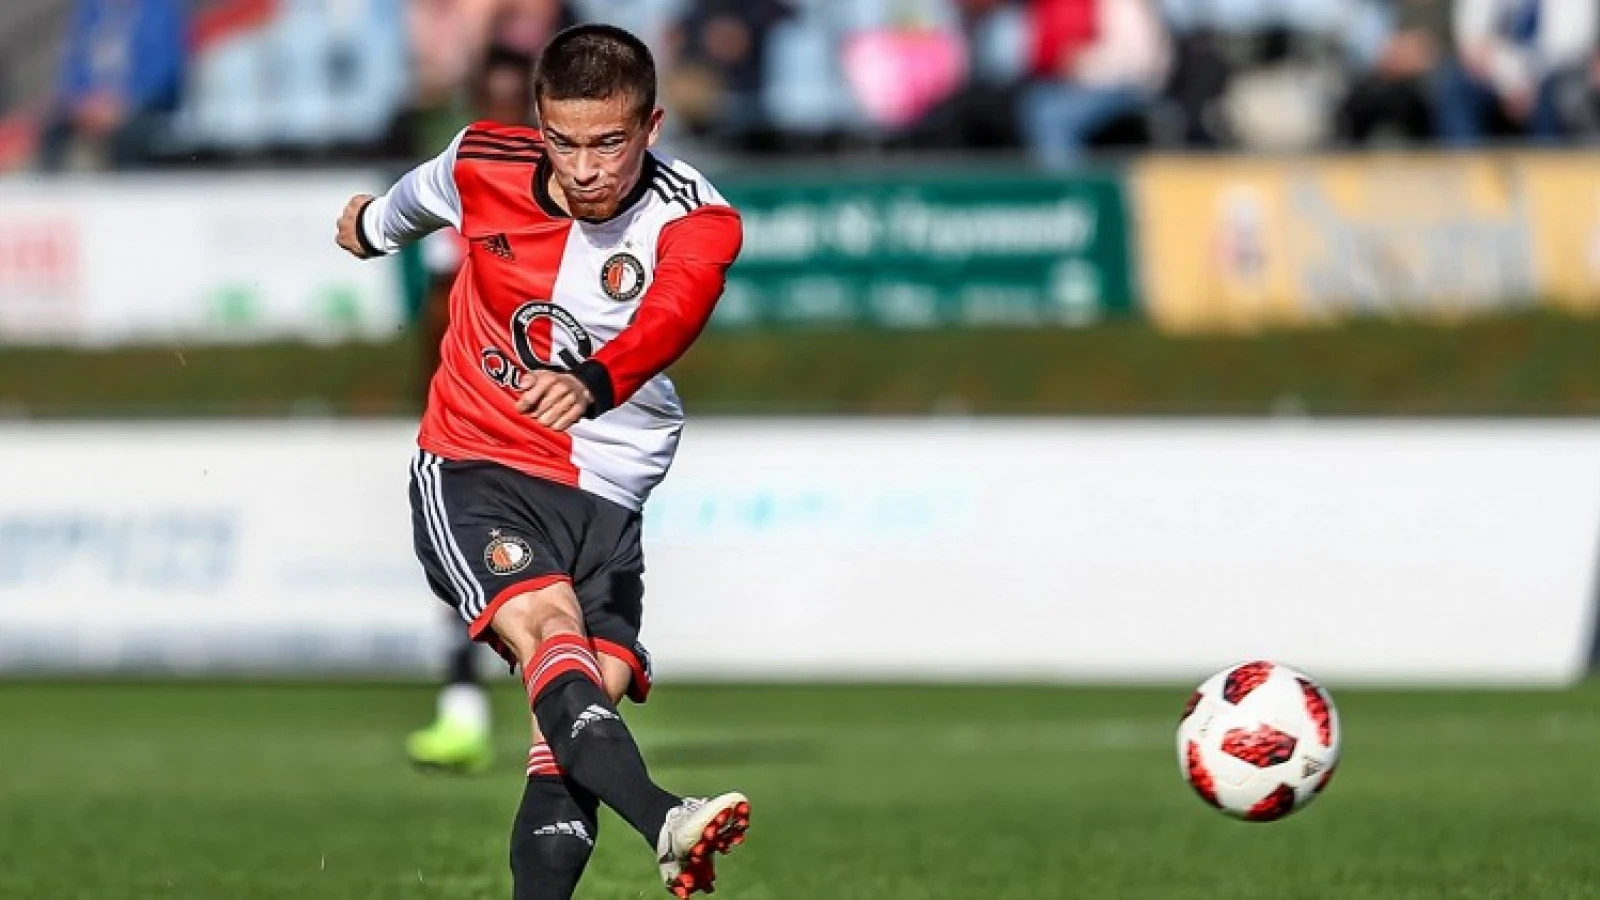 Jong Feyenoord start vandaag in de kampioenspoule van beloftencompetitie